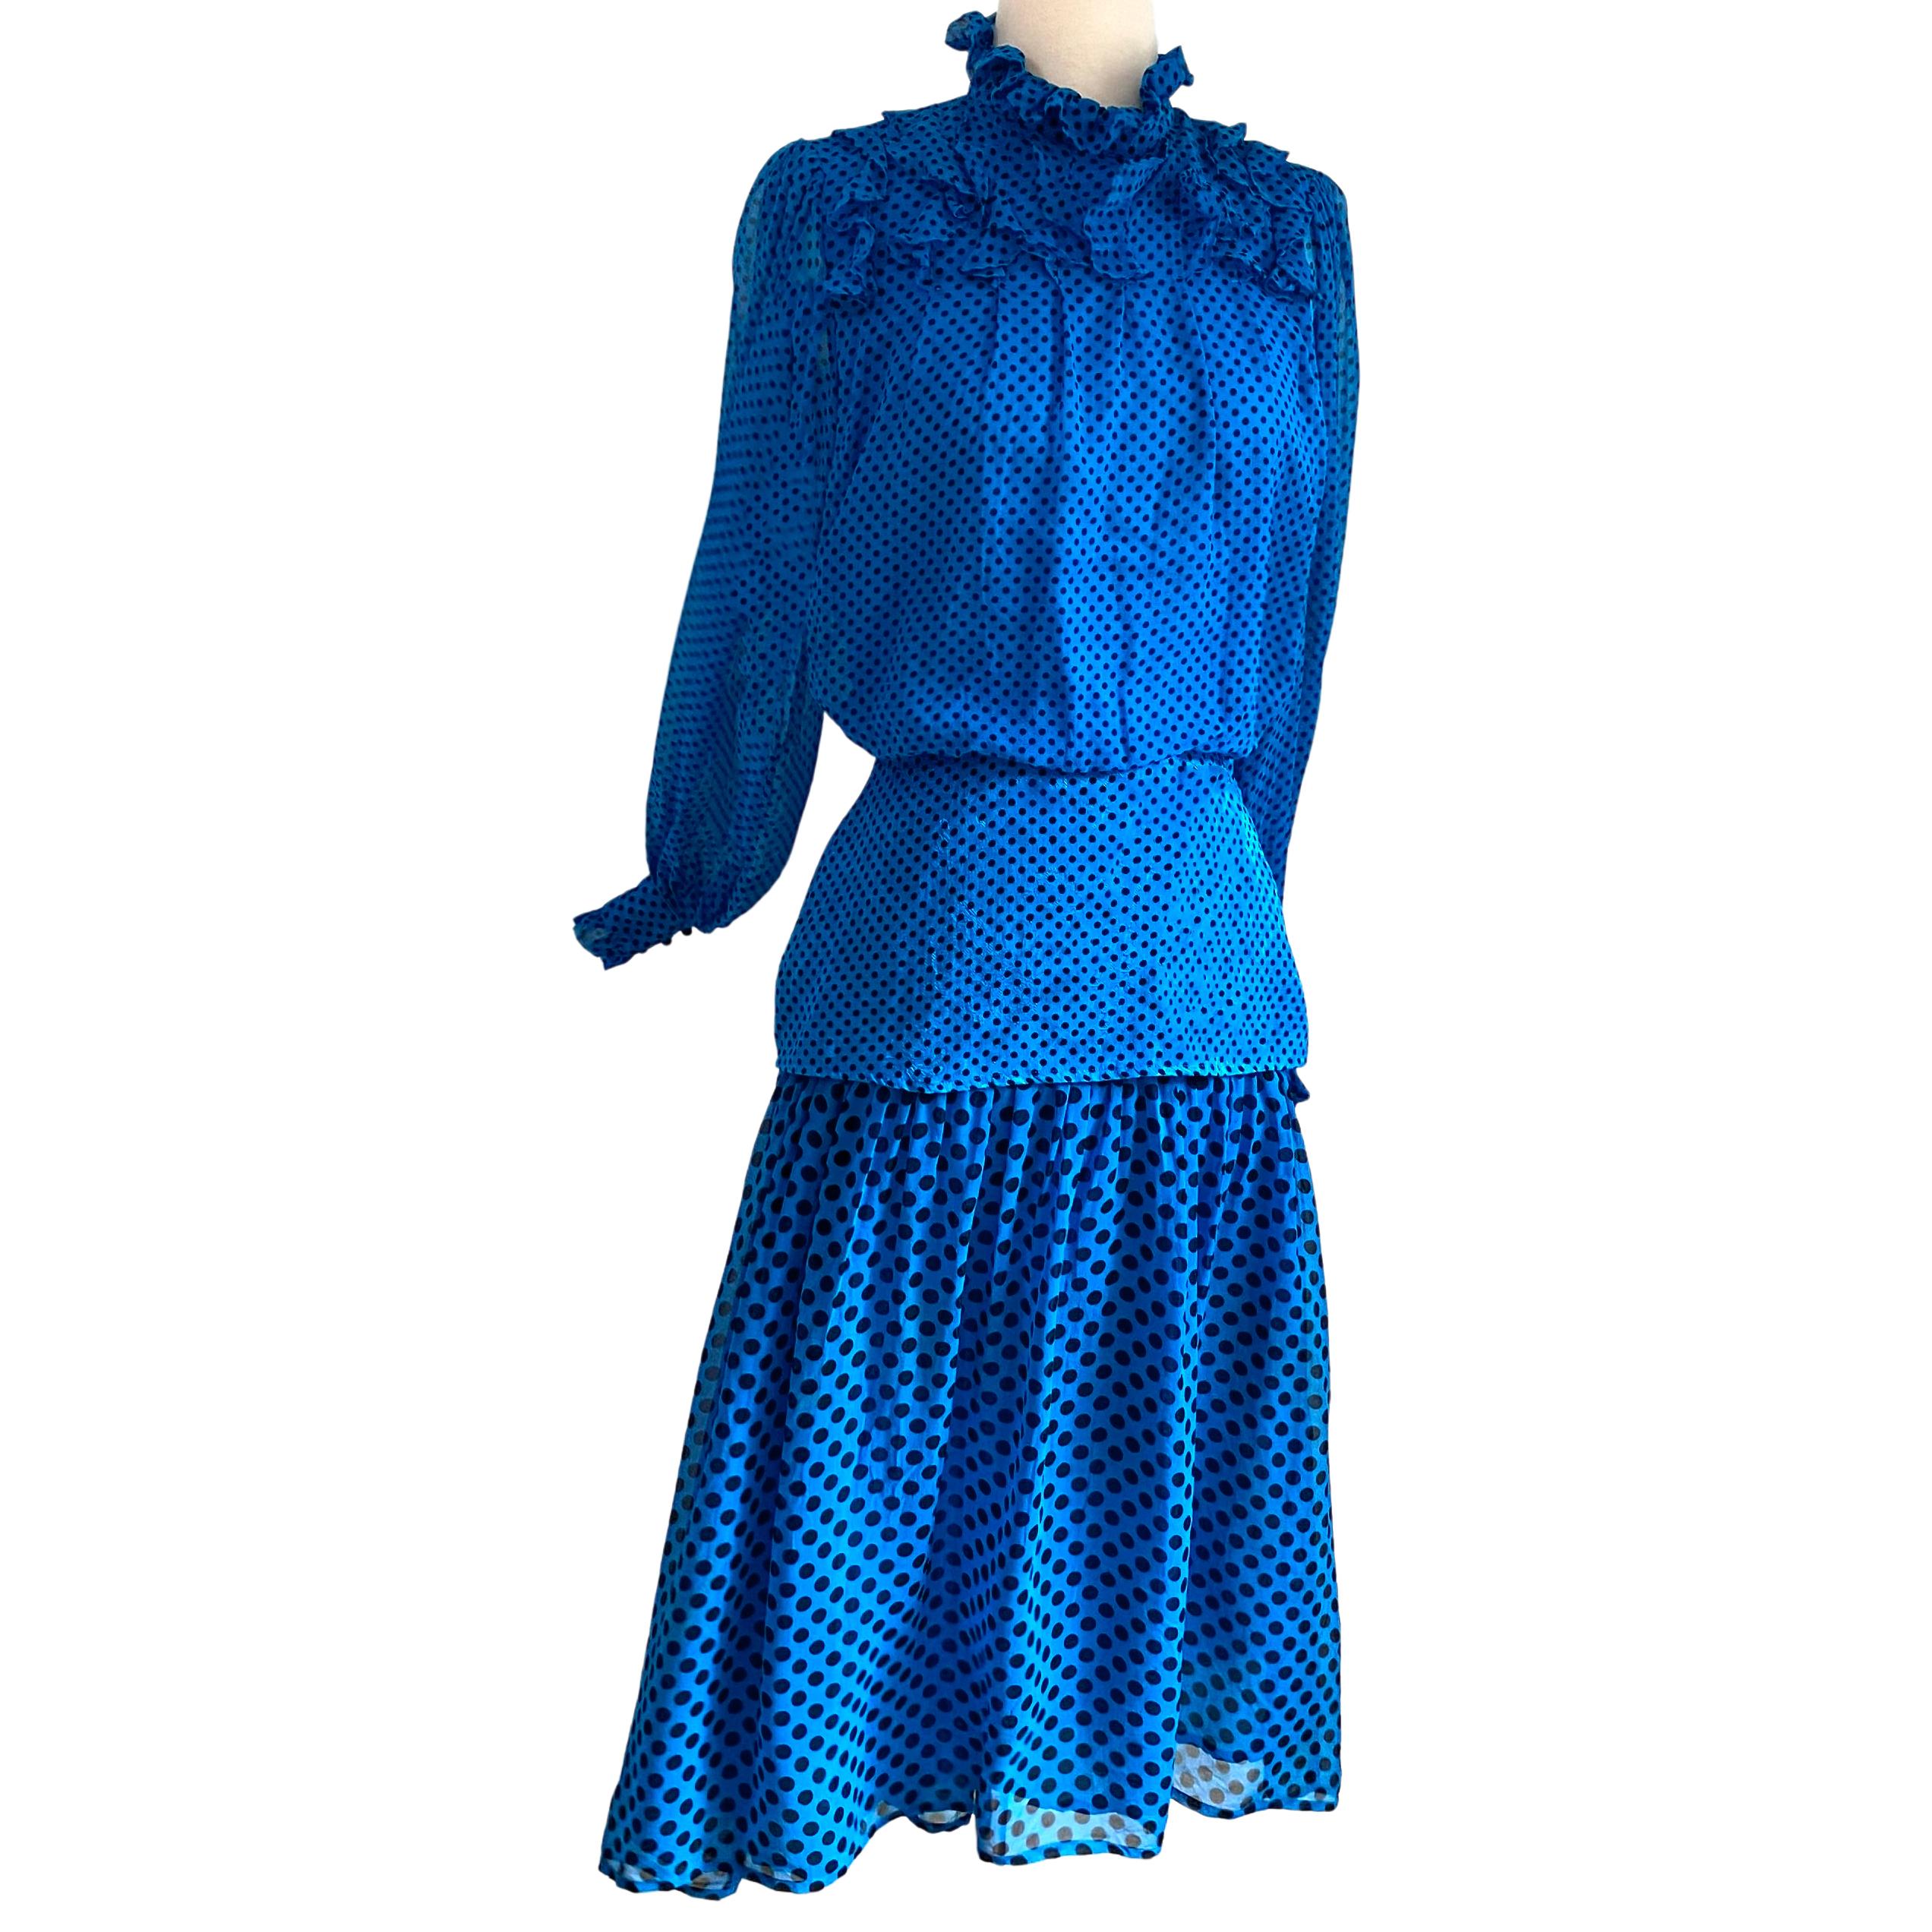 Cobalt silk chiffon georgette dress with generous billowy sleeves, hip yoke, fly-away skirt and just enough ruffles.
Material: 100% long-filament silk chiffon georgette with matching mixed-media silk jacquard yoke.
Lining: 100% silk
Print: black